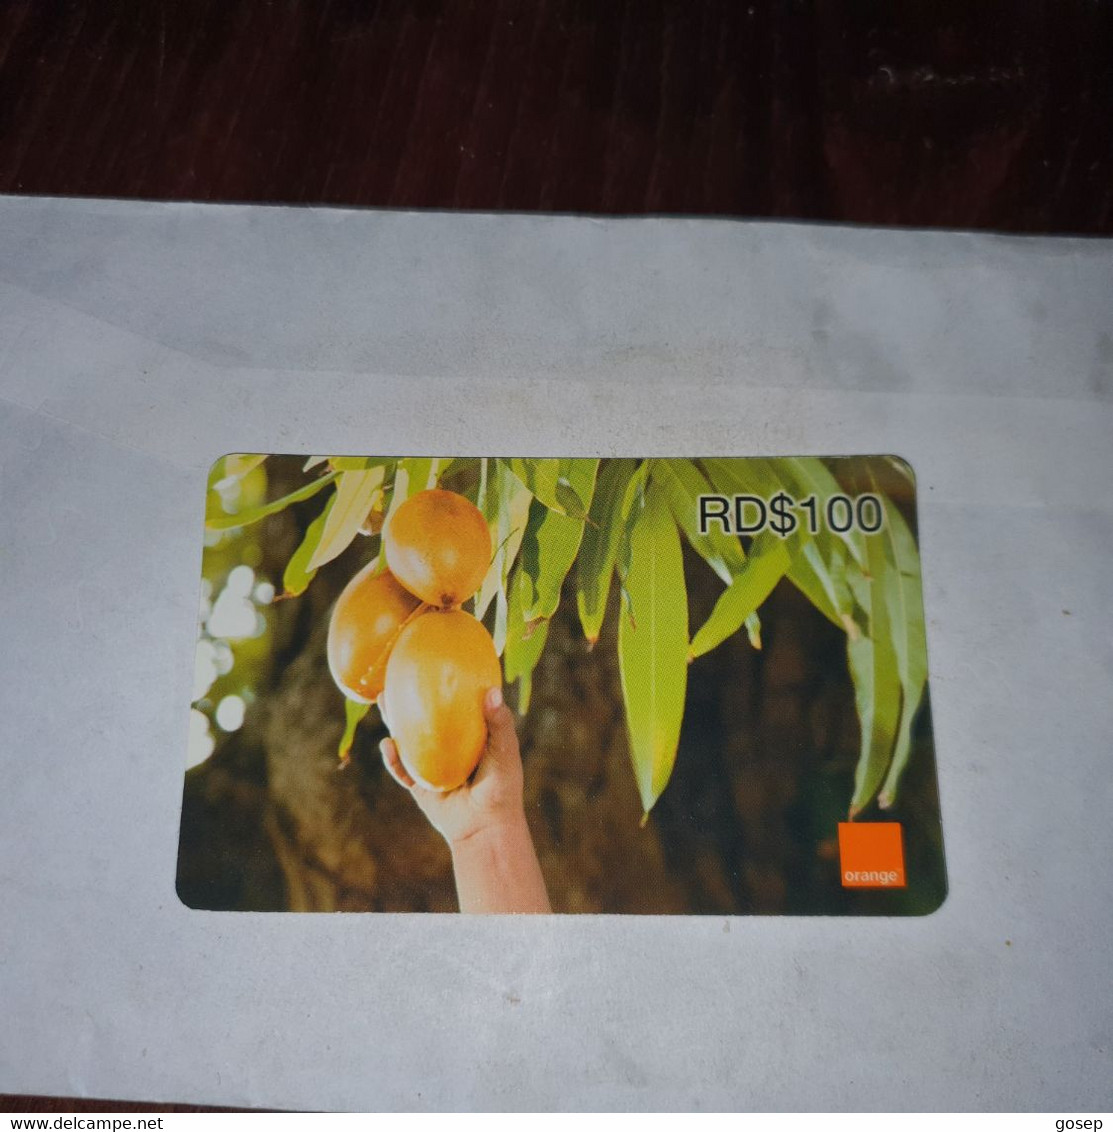 Dominicana-(orange-28rd$100)-(1581-5764-9681-15)-three Mango-(31)-(31.12.2009)-used Card+1card Prepiad Free - Dominicaine